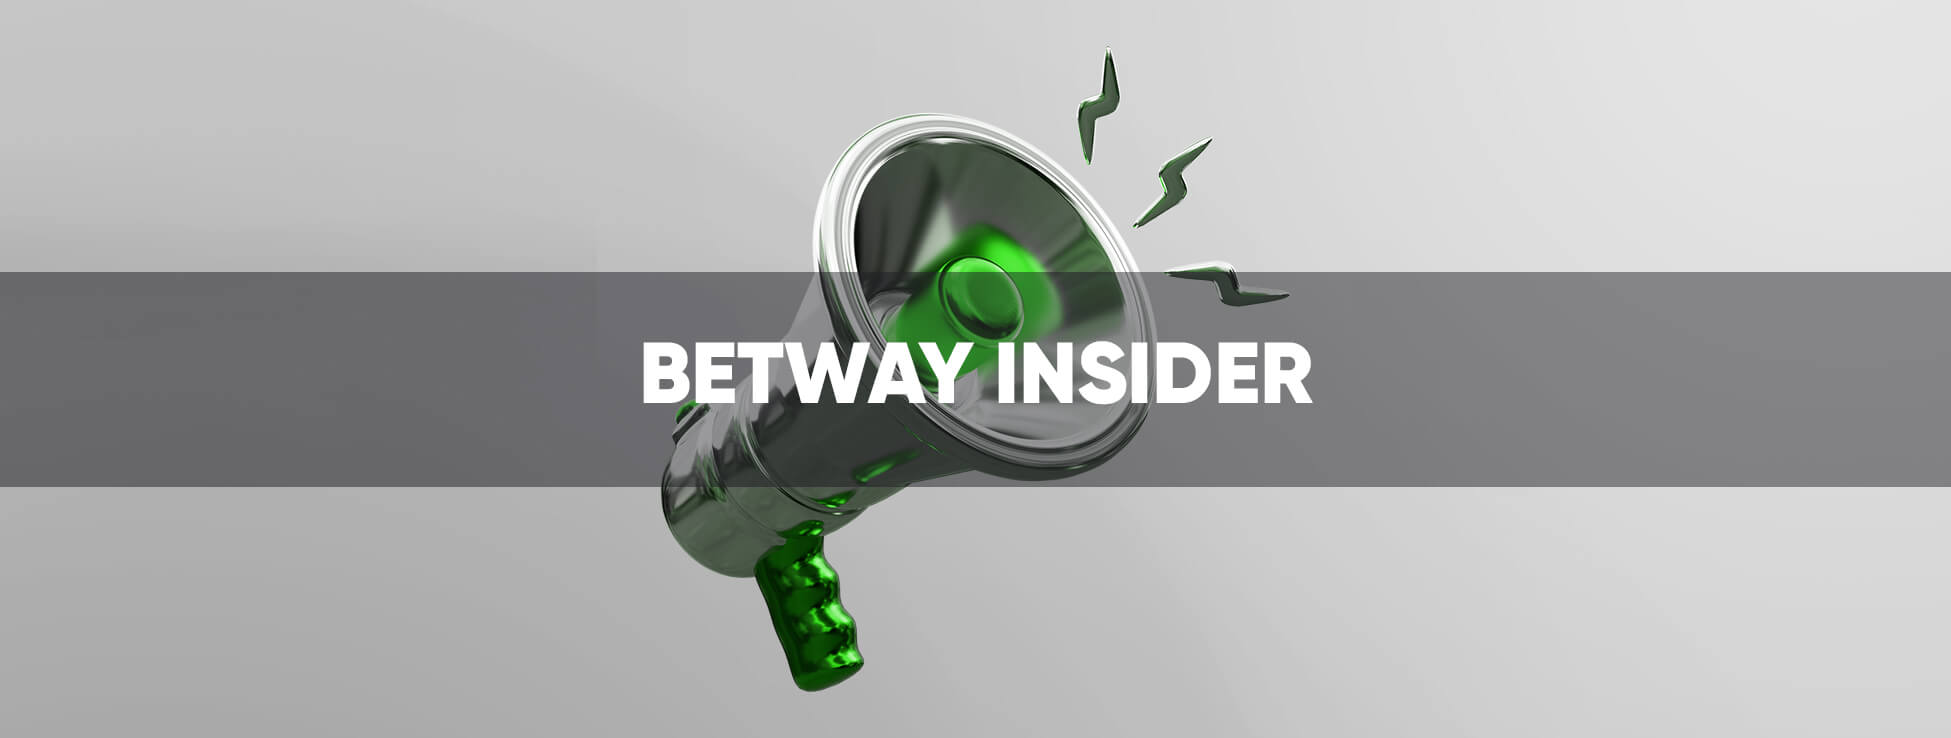 Official Betway website